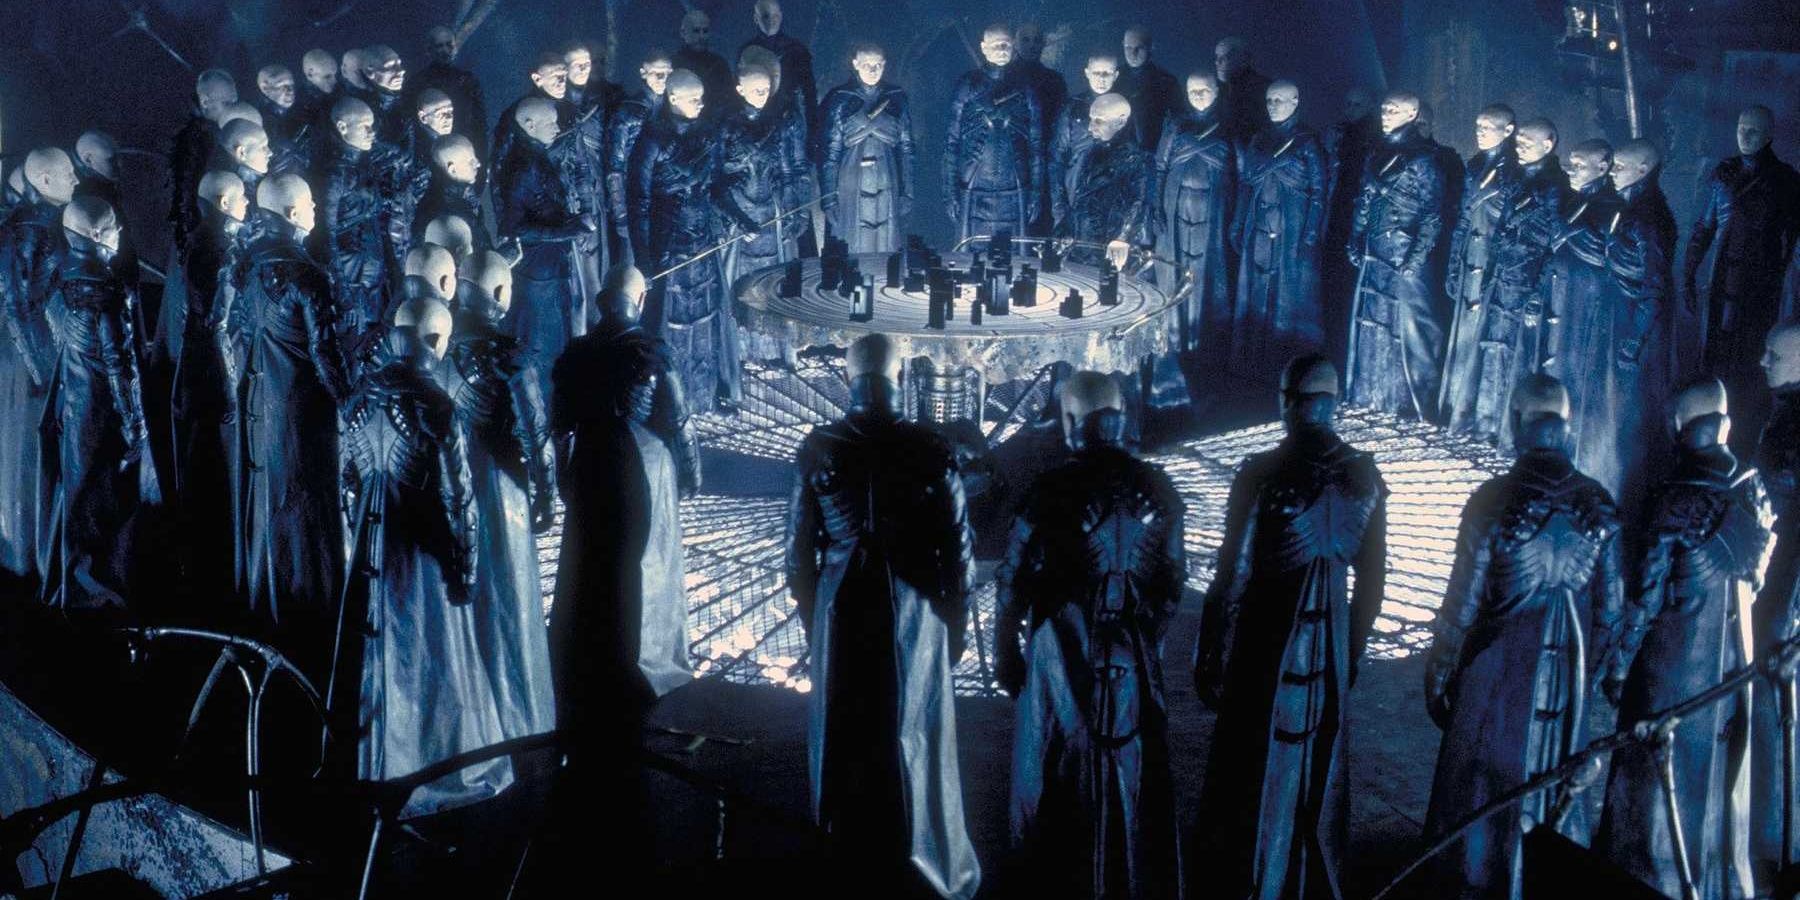 The cult in Dark City